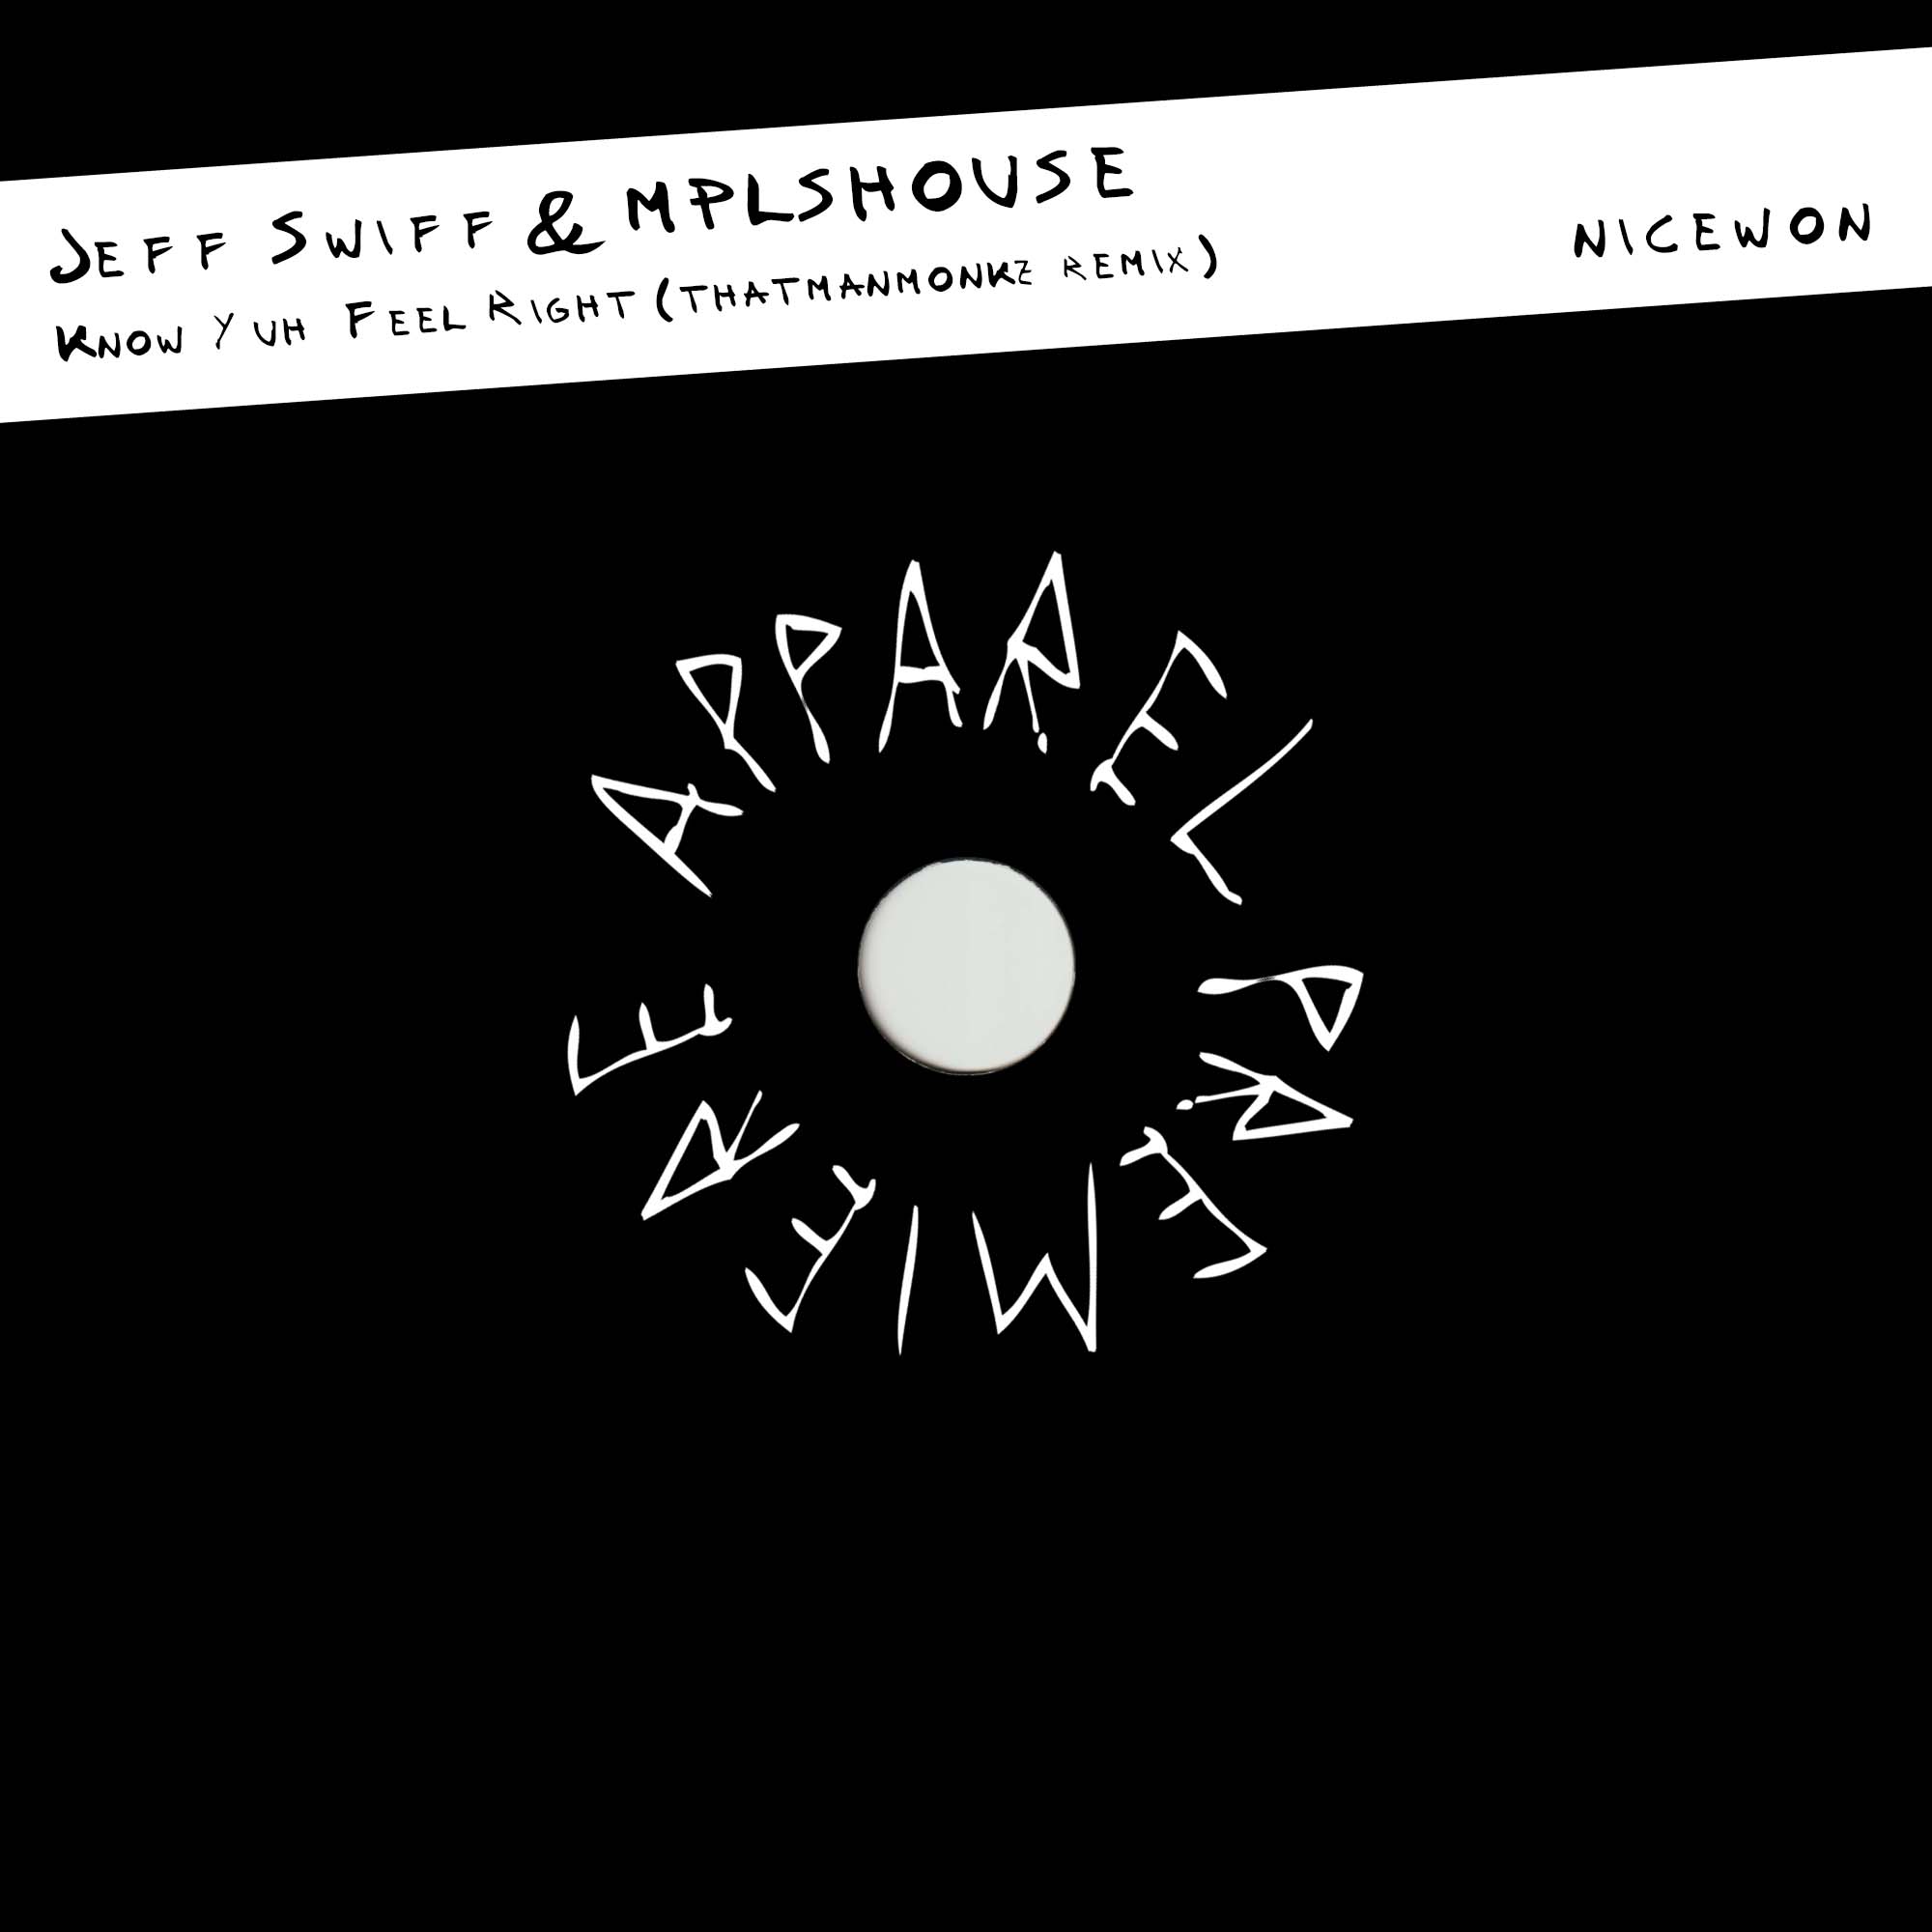 APPAREL PREMIERE Jeff Swiff & MPLSHOUSE – Know Yuh Feel Right (thatmanmonkz remix) [Nicewon Recordings]